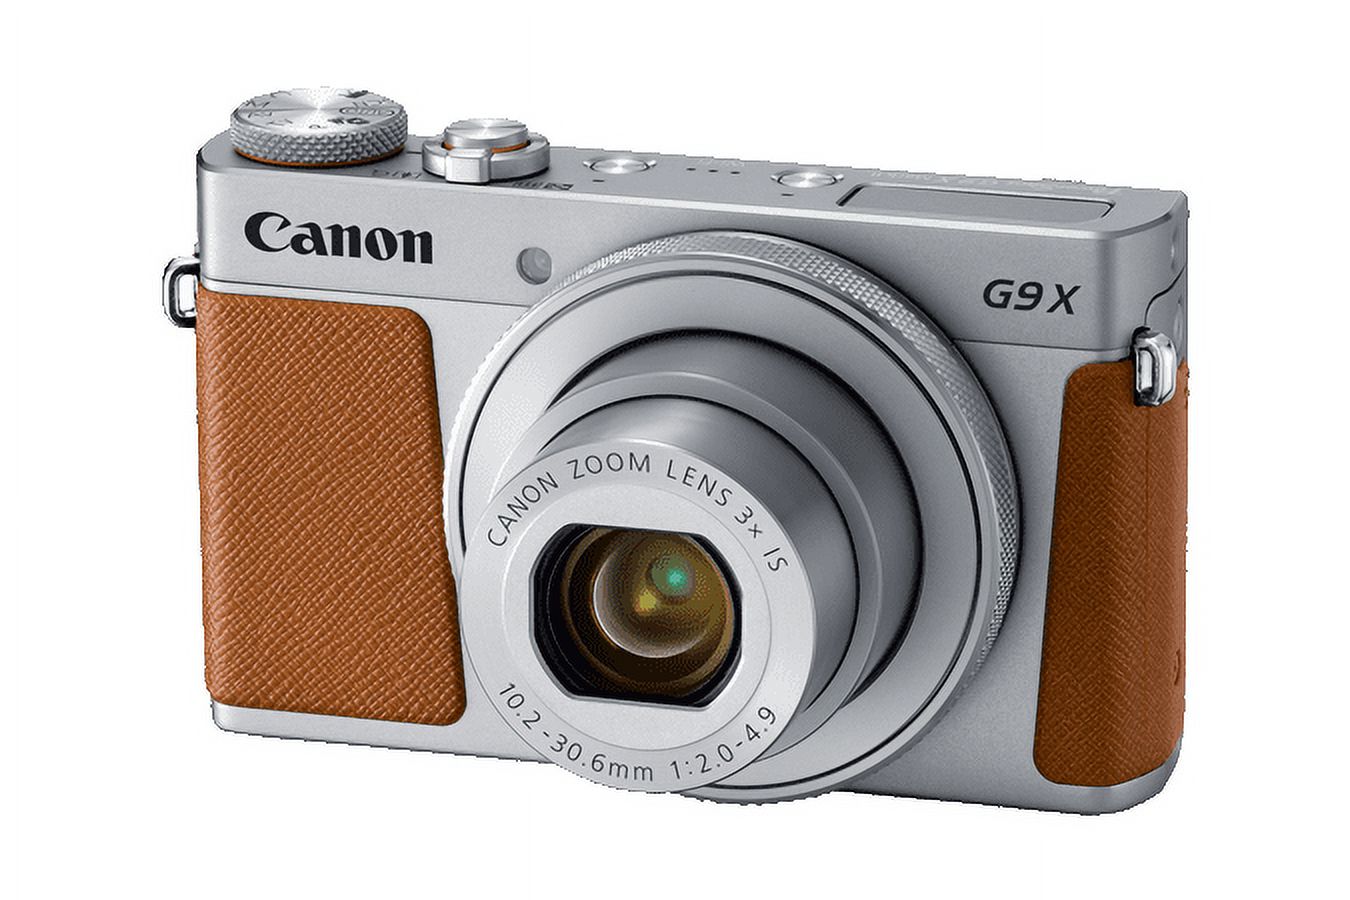 Canon PowerShot G9 X Mark II Digital Camera - Silver - image 1 of 2